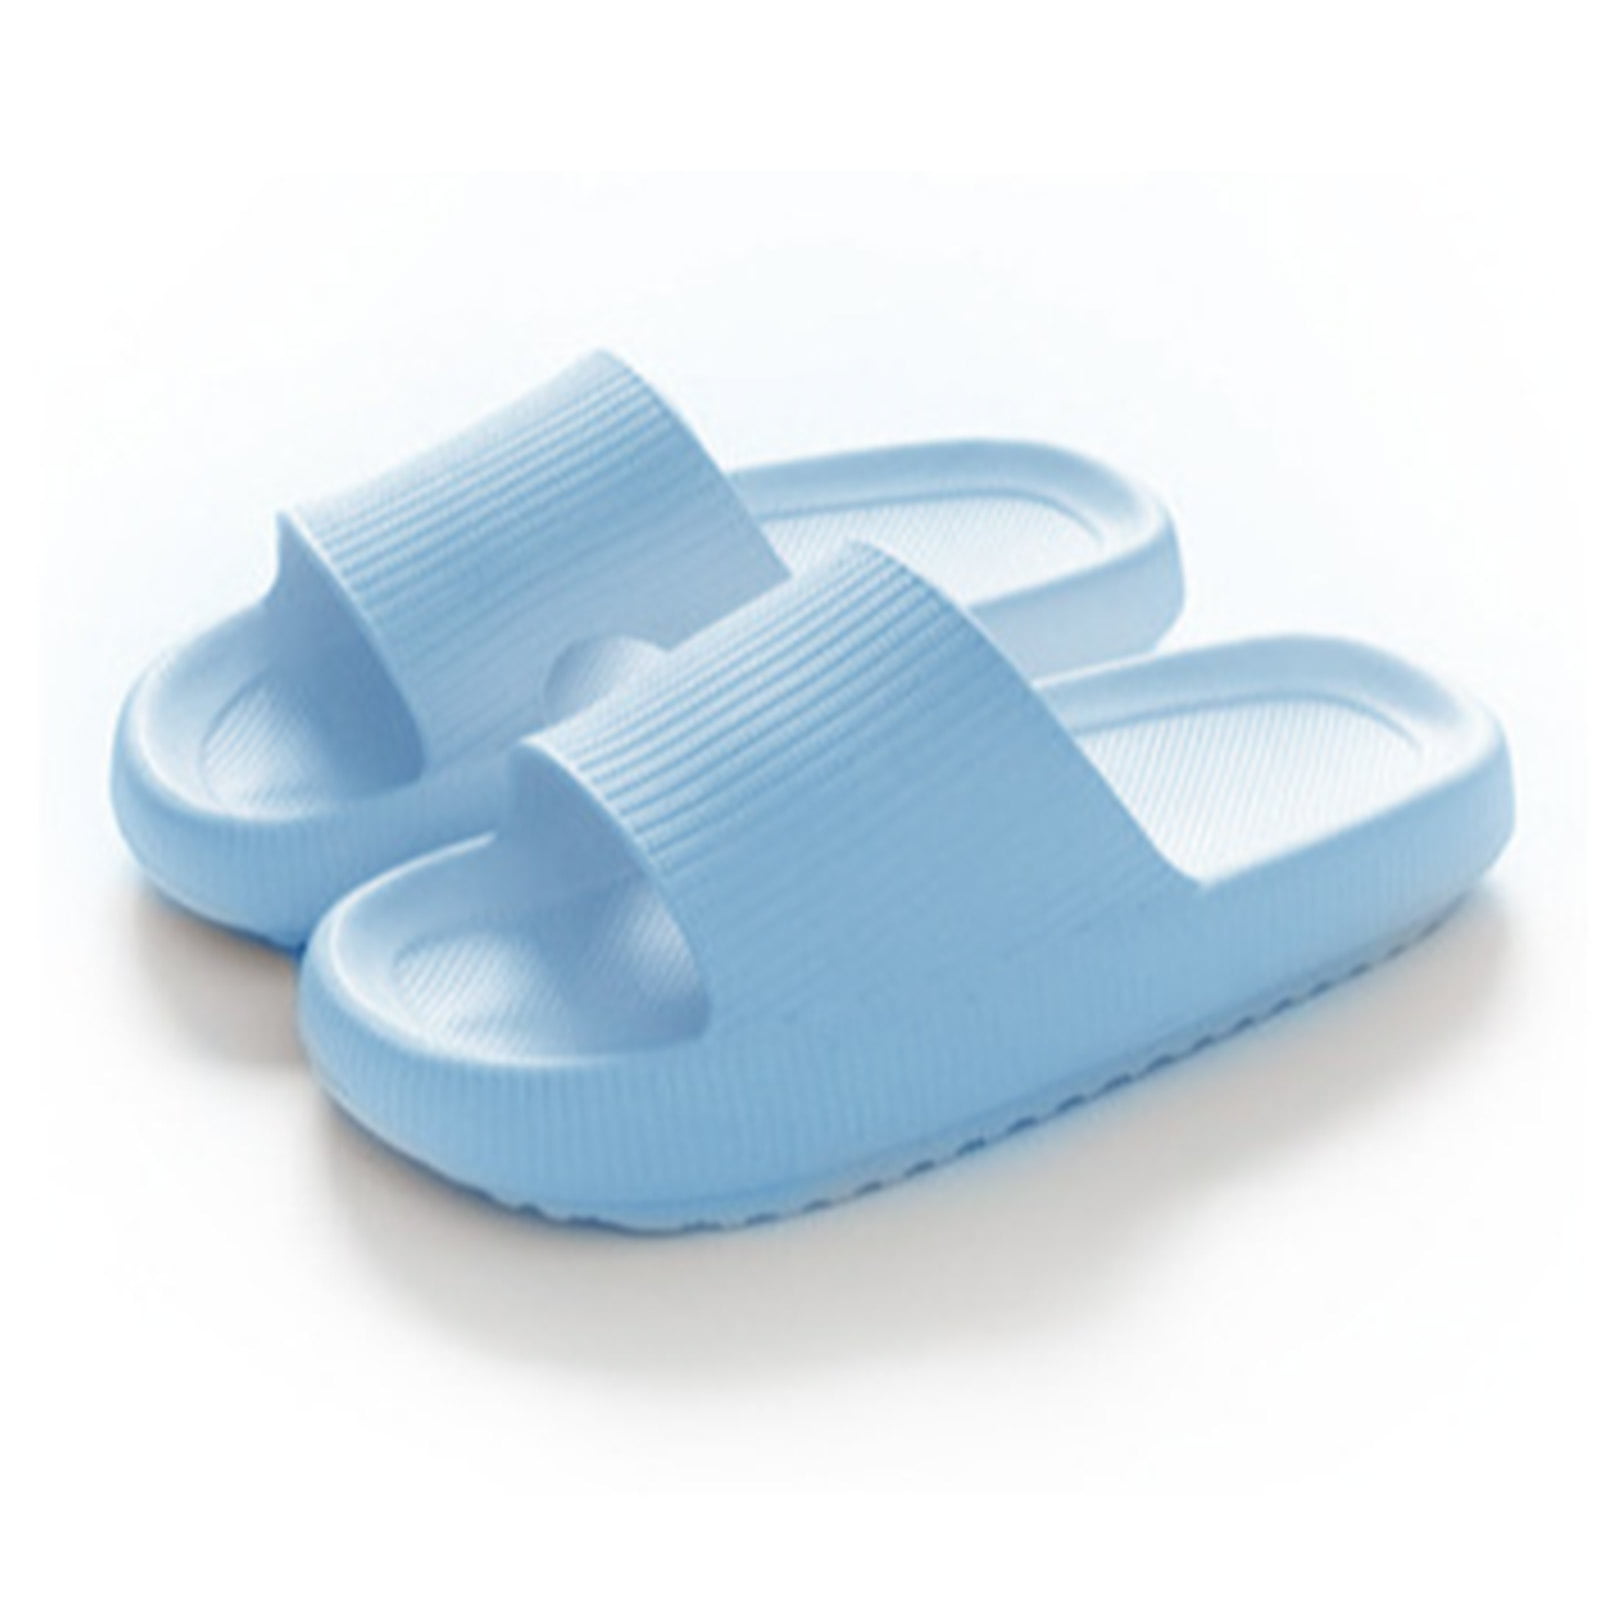 AiJiaTu Unisex Shower Sandals Slip On Slippers Non-Slip Indoor & Outdoor Floor Sandals Soft Foams Bath Shoes 